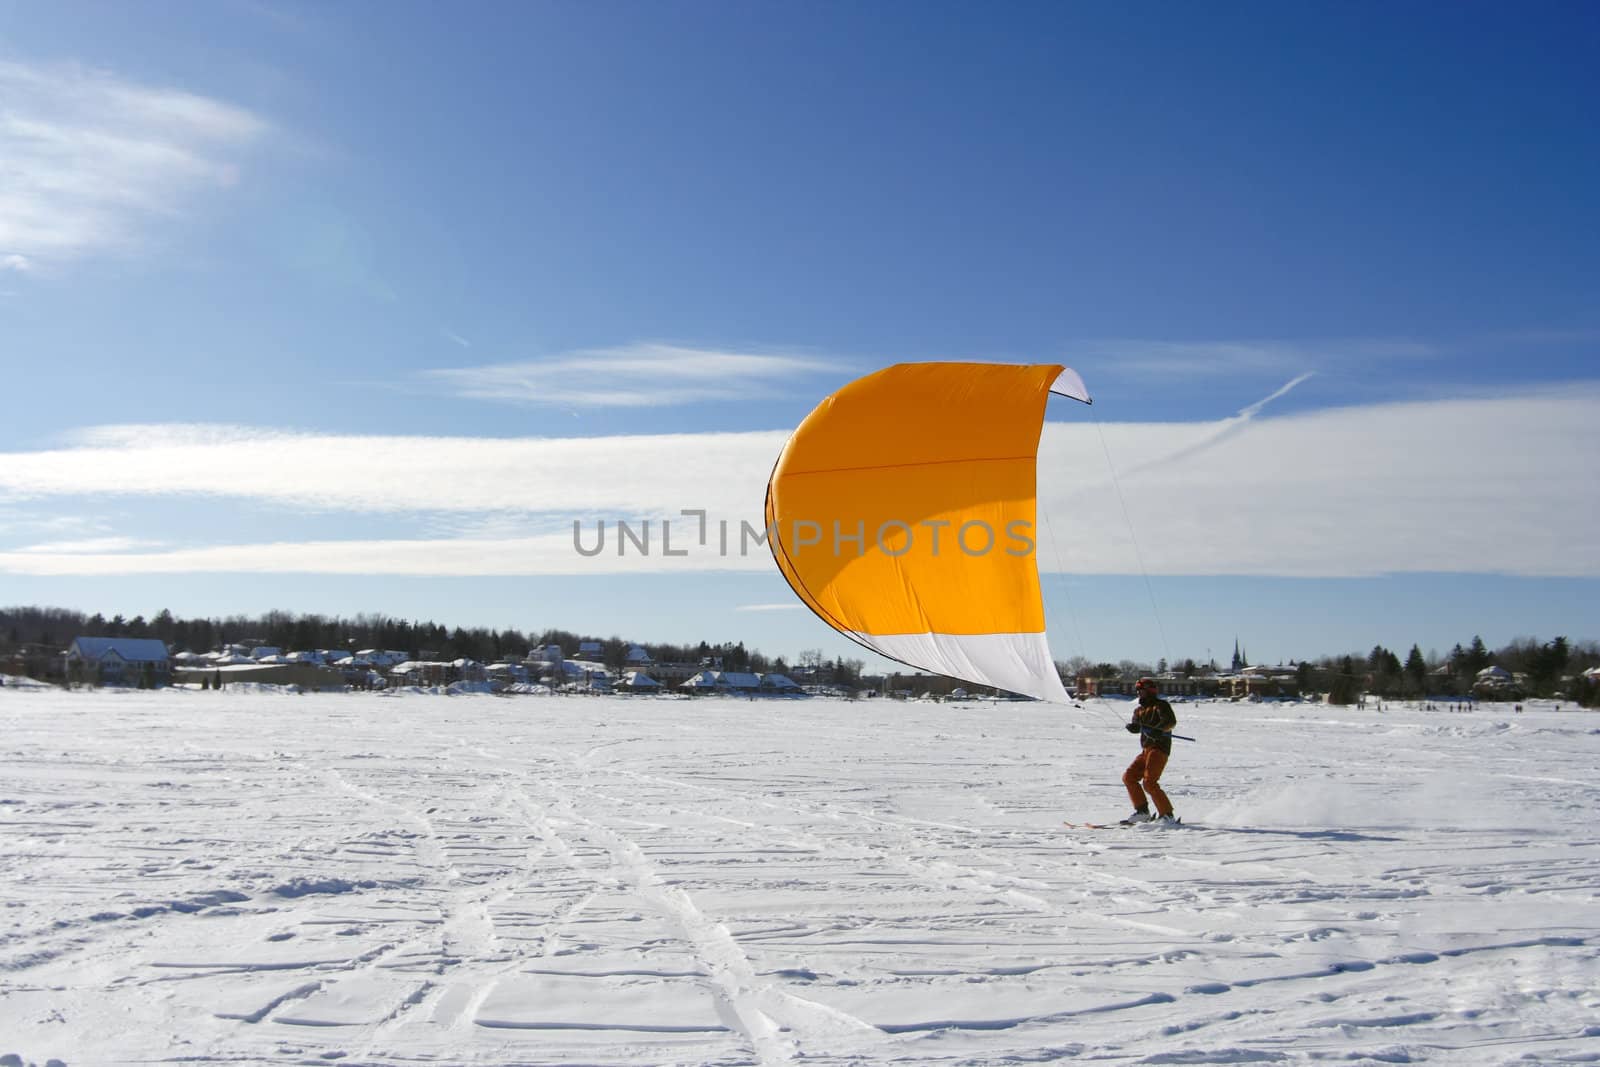 Ski kiting on a frozen lake